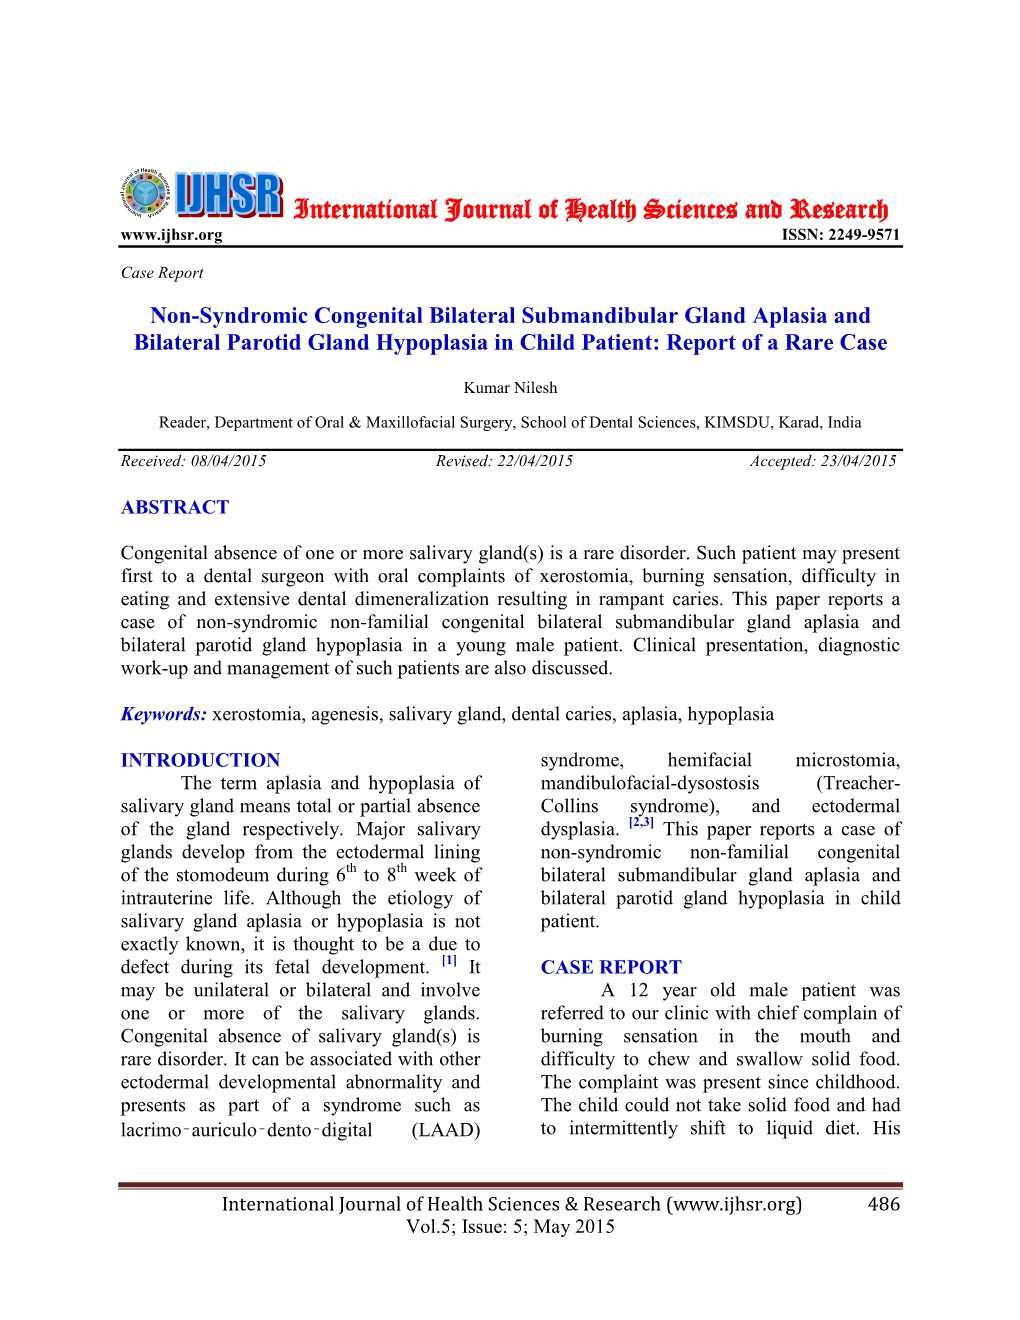 Non-Syndromic Congenital Bilateral Submandibular Gland Aplasia and Bilateral Parotid Gland Hypoplasia in Child Patient: Report of a Rare Case